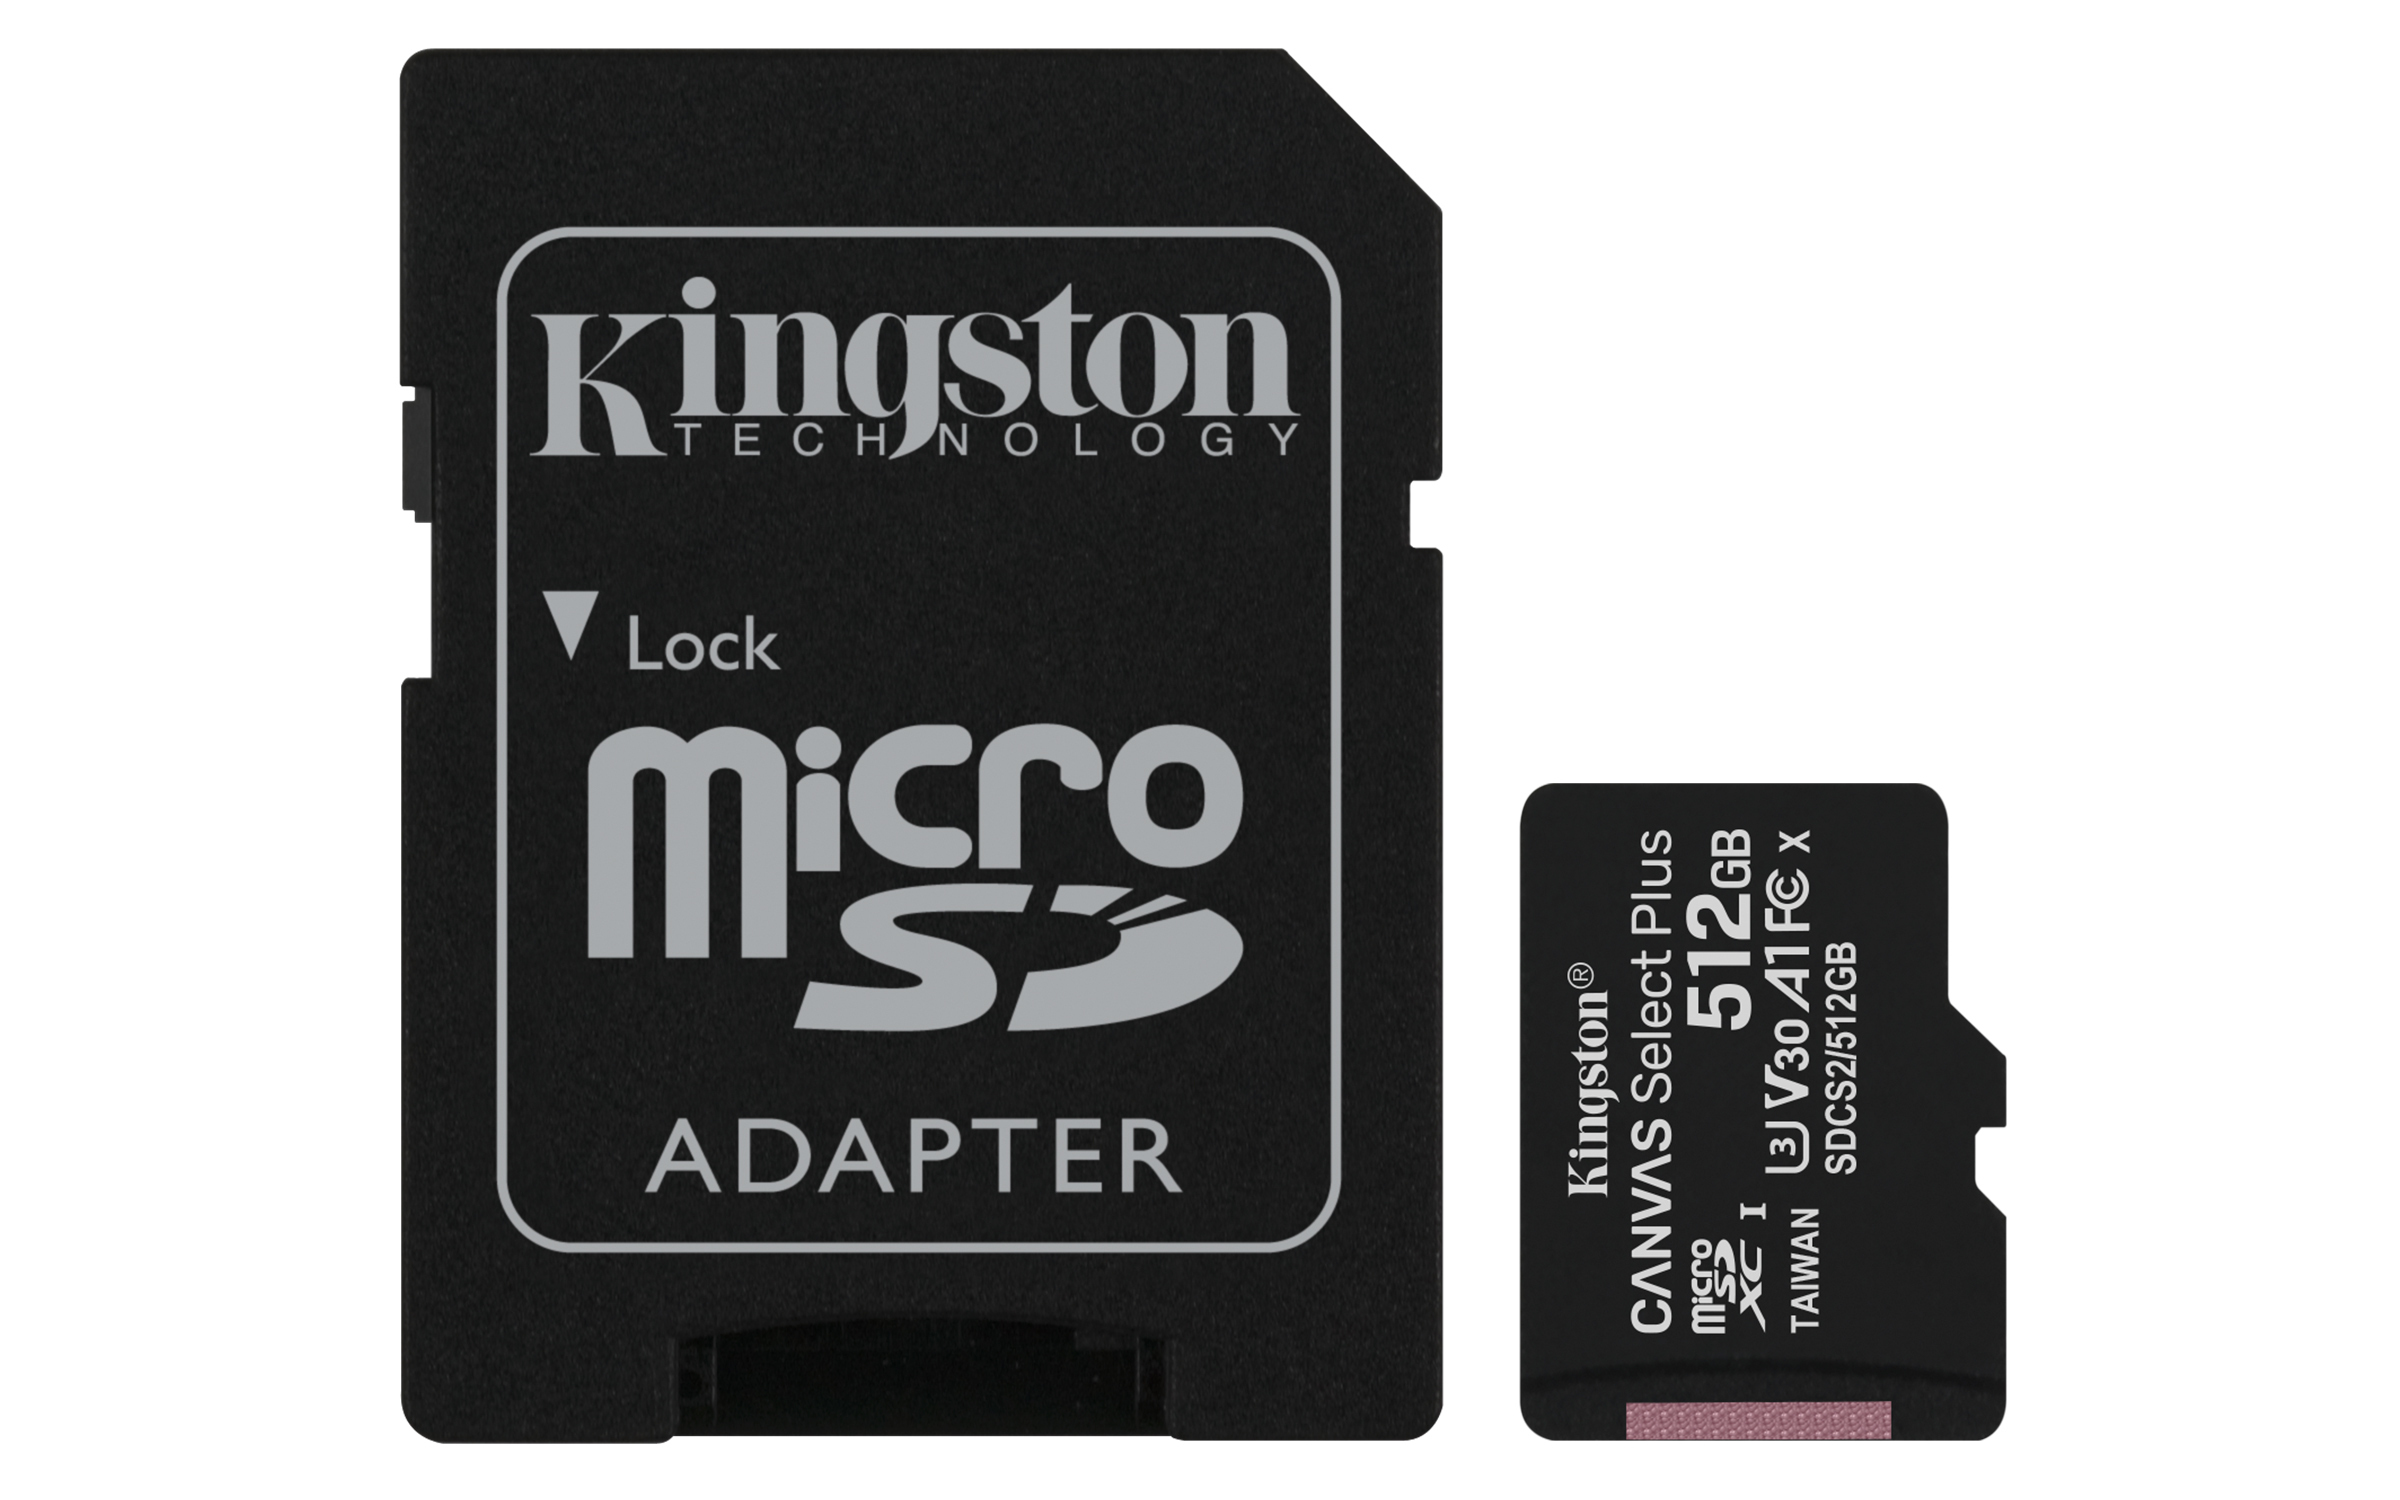 Kingston Technology 512GB micSDXC Canvas Select Plus 100R A1 C10 kaart + ADP